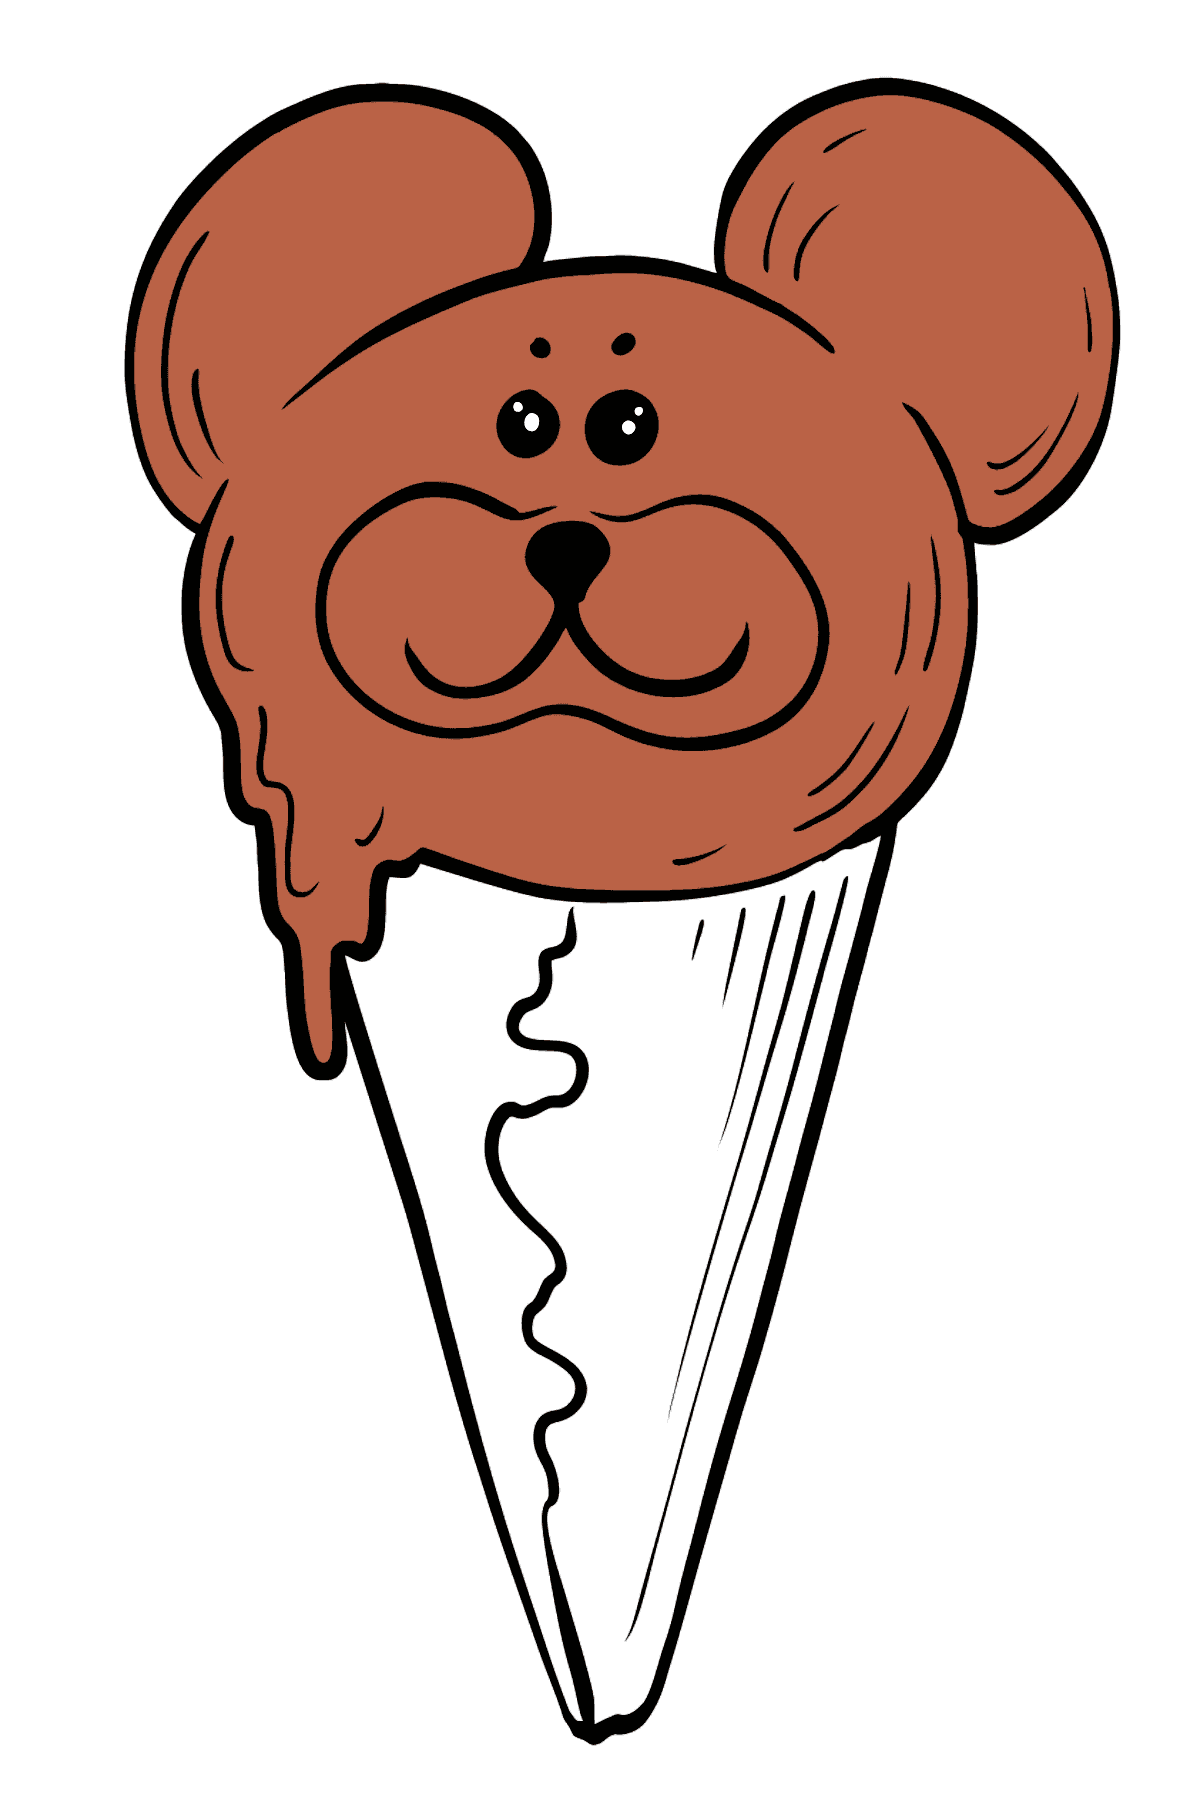 Dibujo de Helado - Oso de chocolate con ojos para colorear - Dibujos para Colorear para Niños